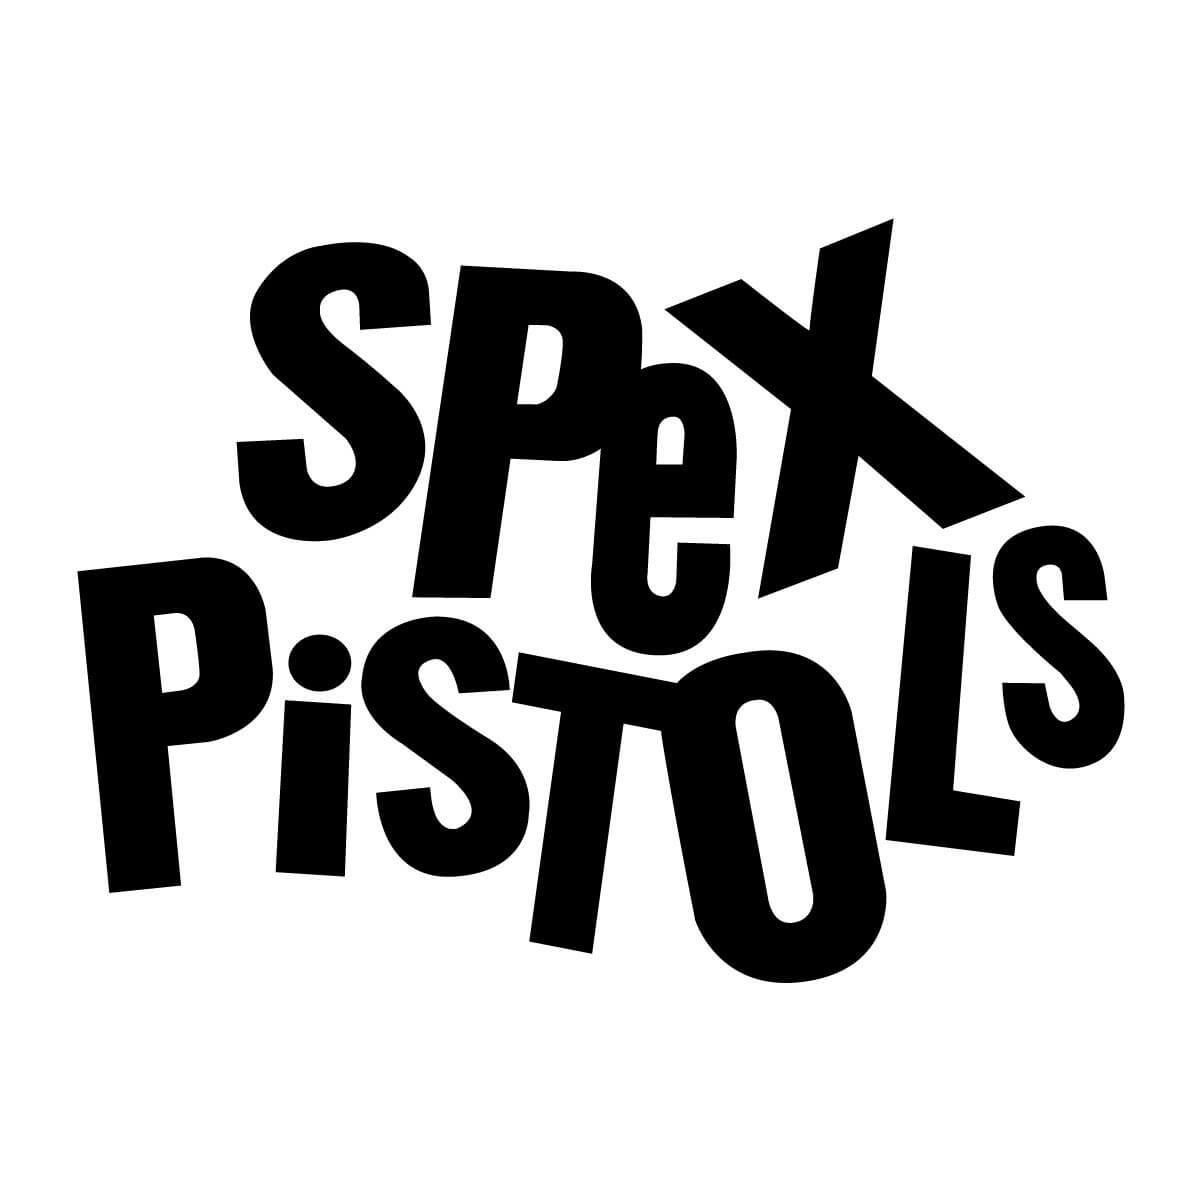 Black and white Spex Pistols logo.